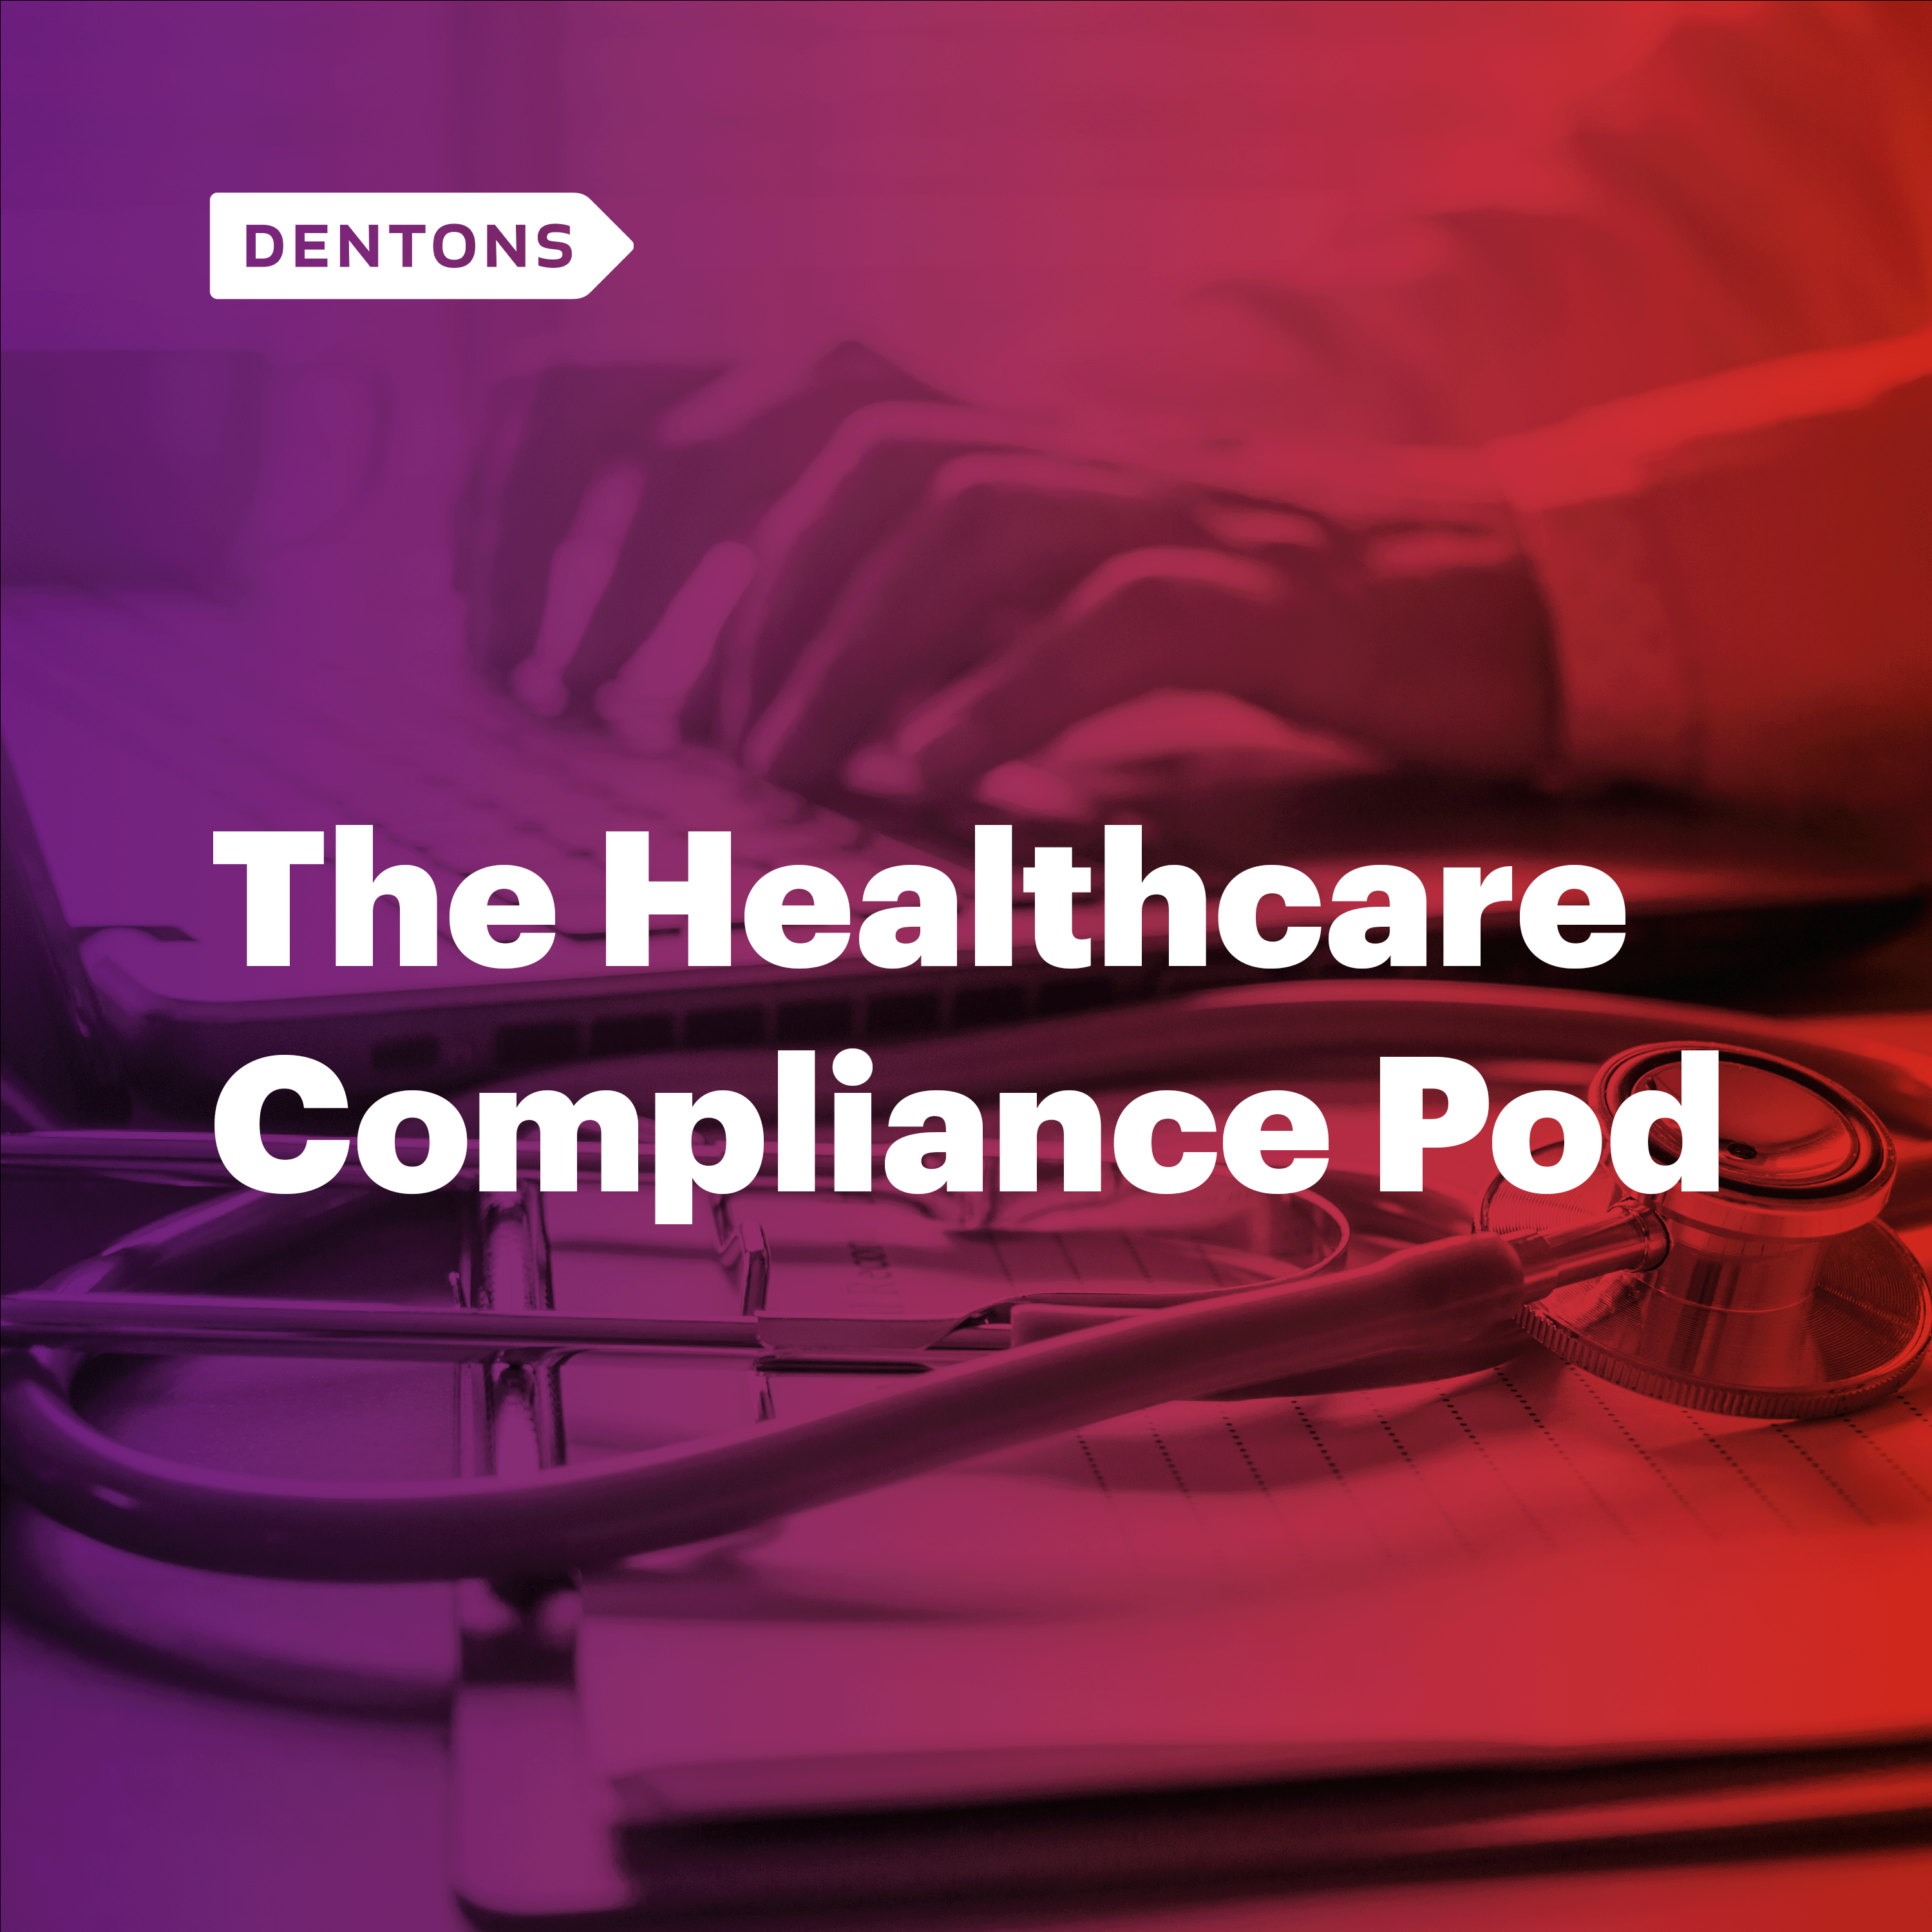 The Healthcare Compliance Pod